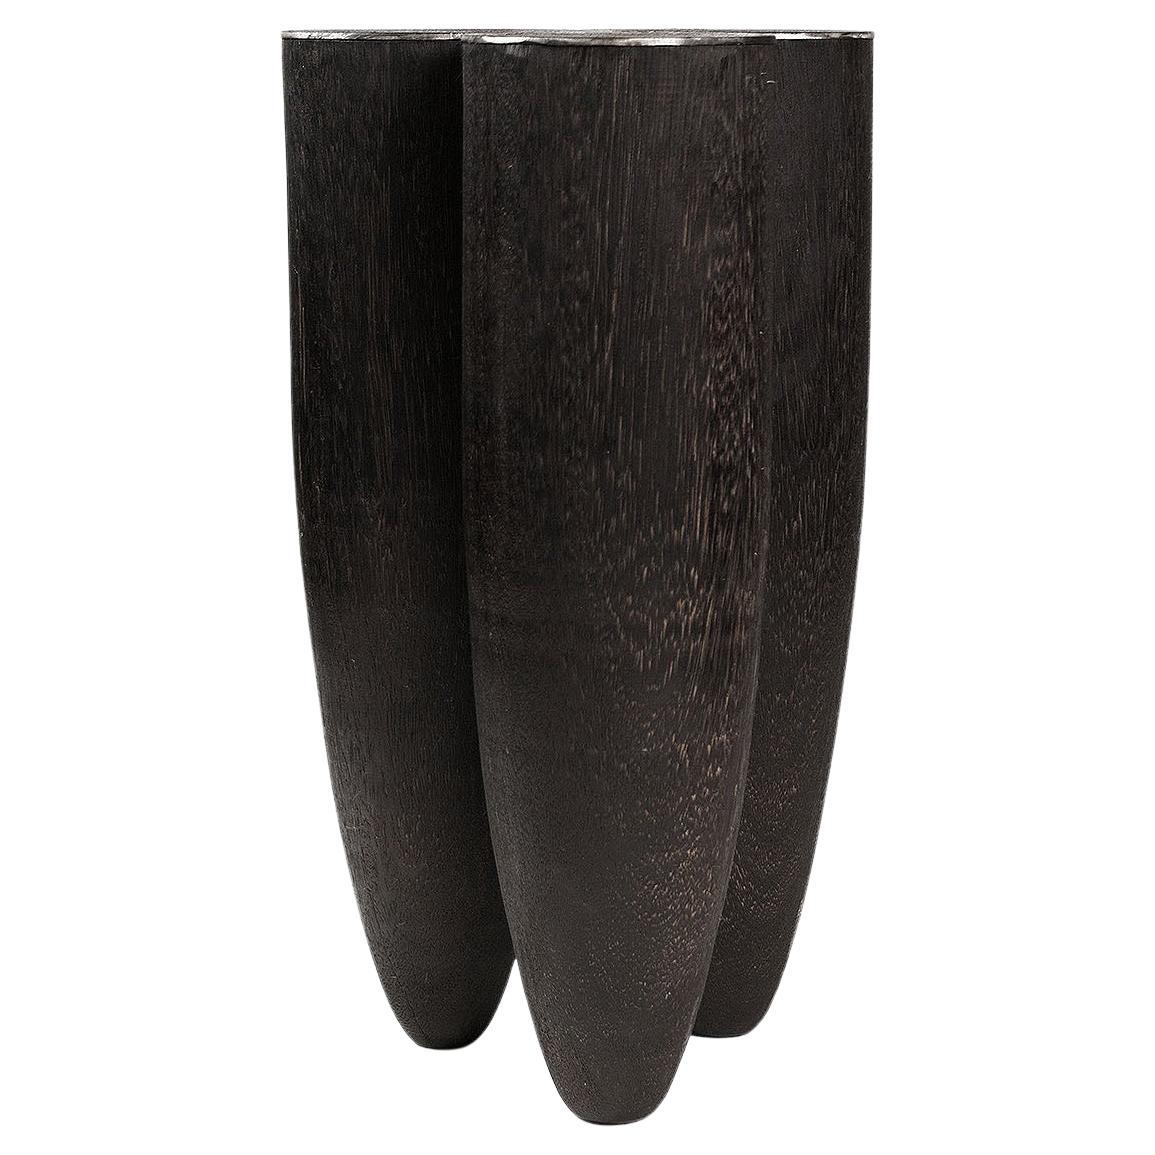 Contemporary Black Stool in Iroko Wood, Senufo by Arno Declercq